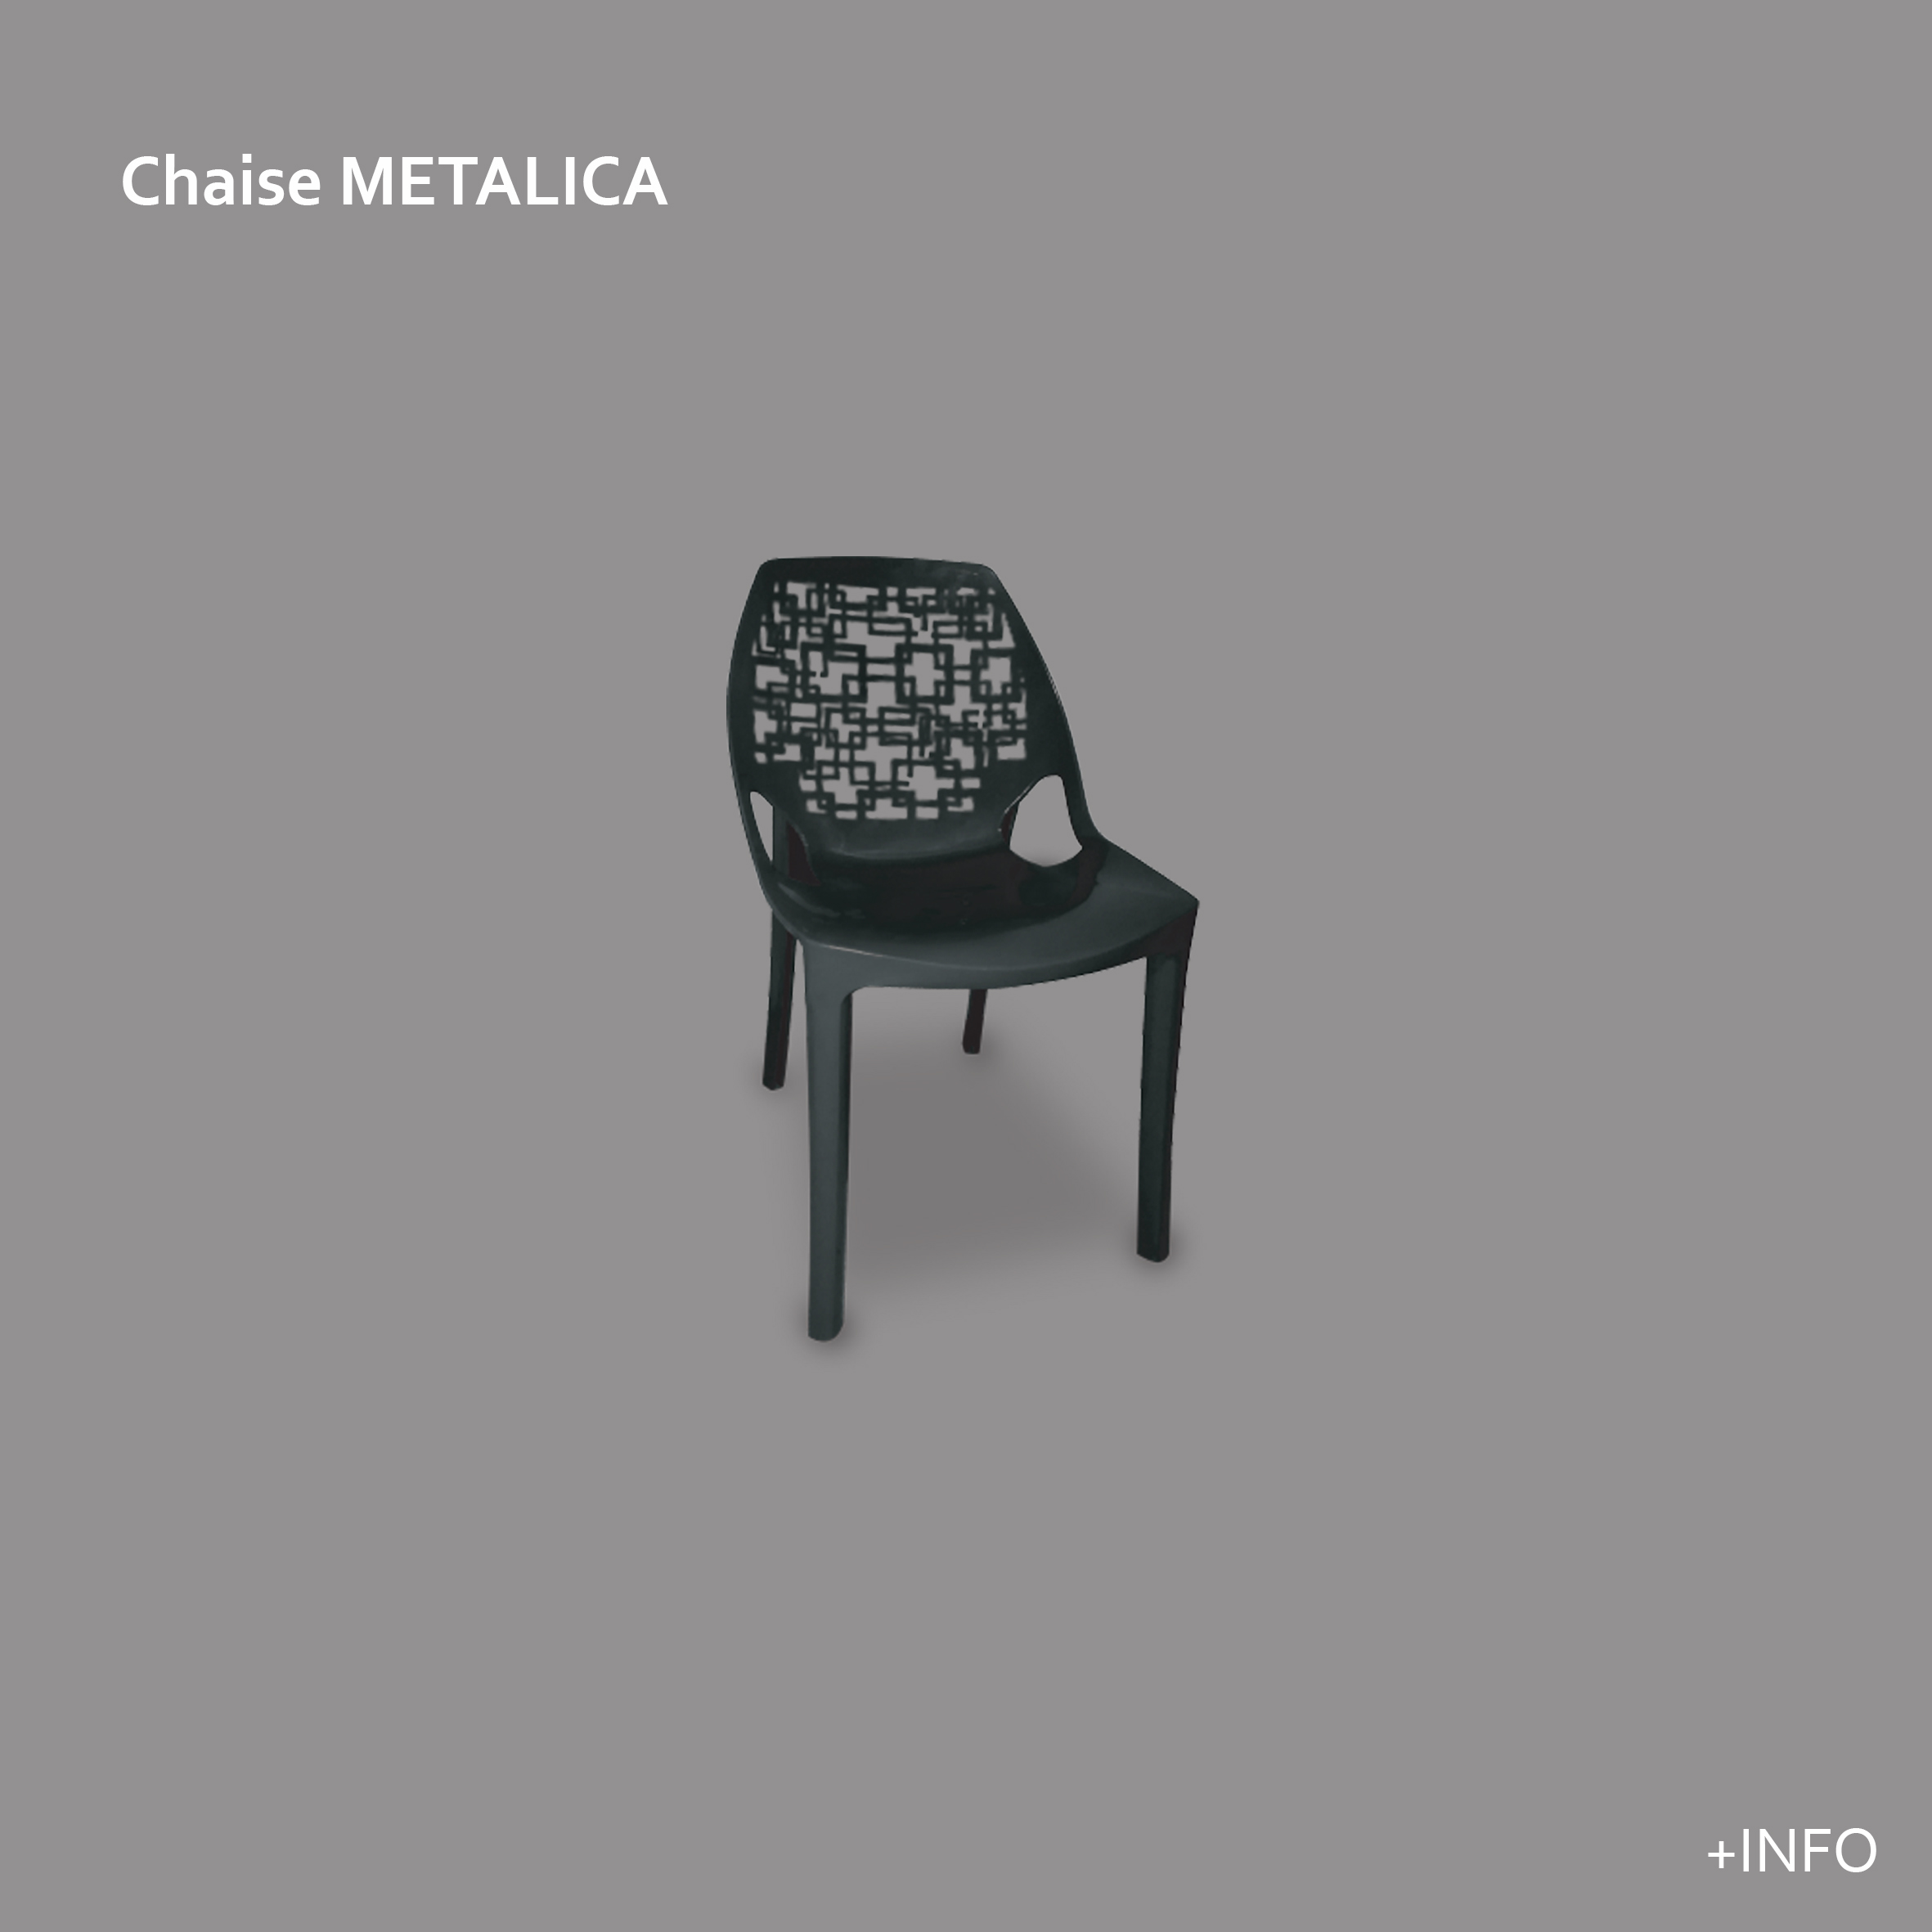 Metalica chaise